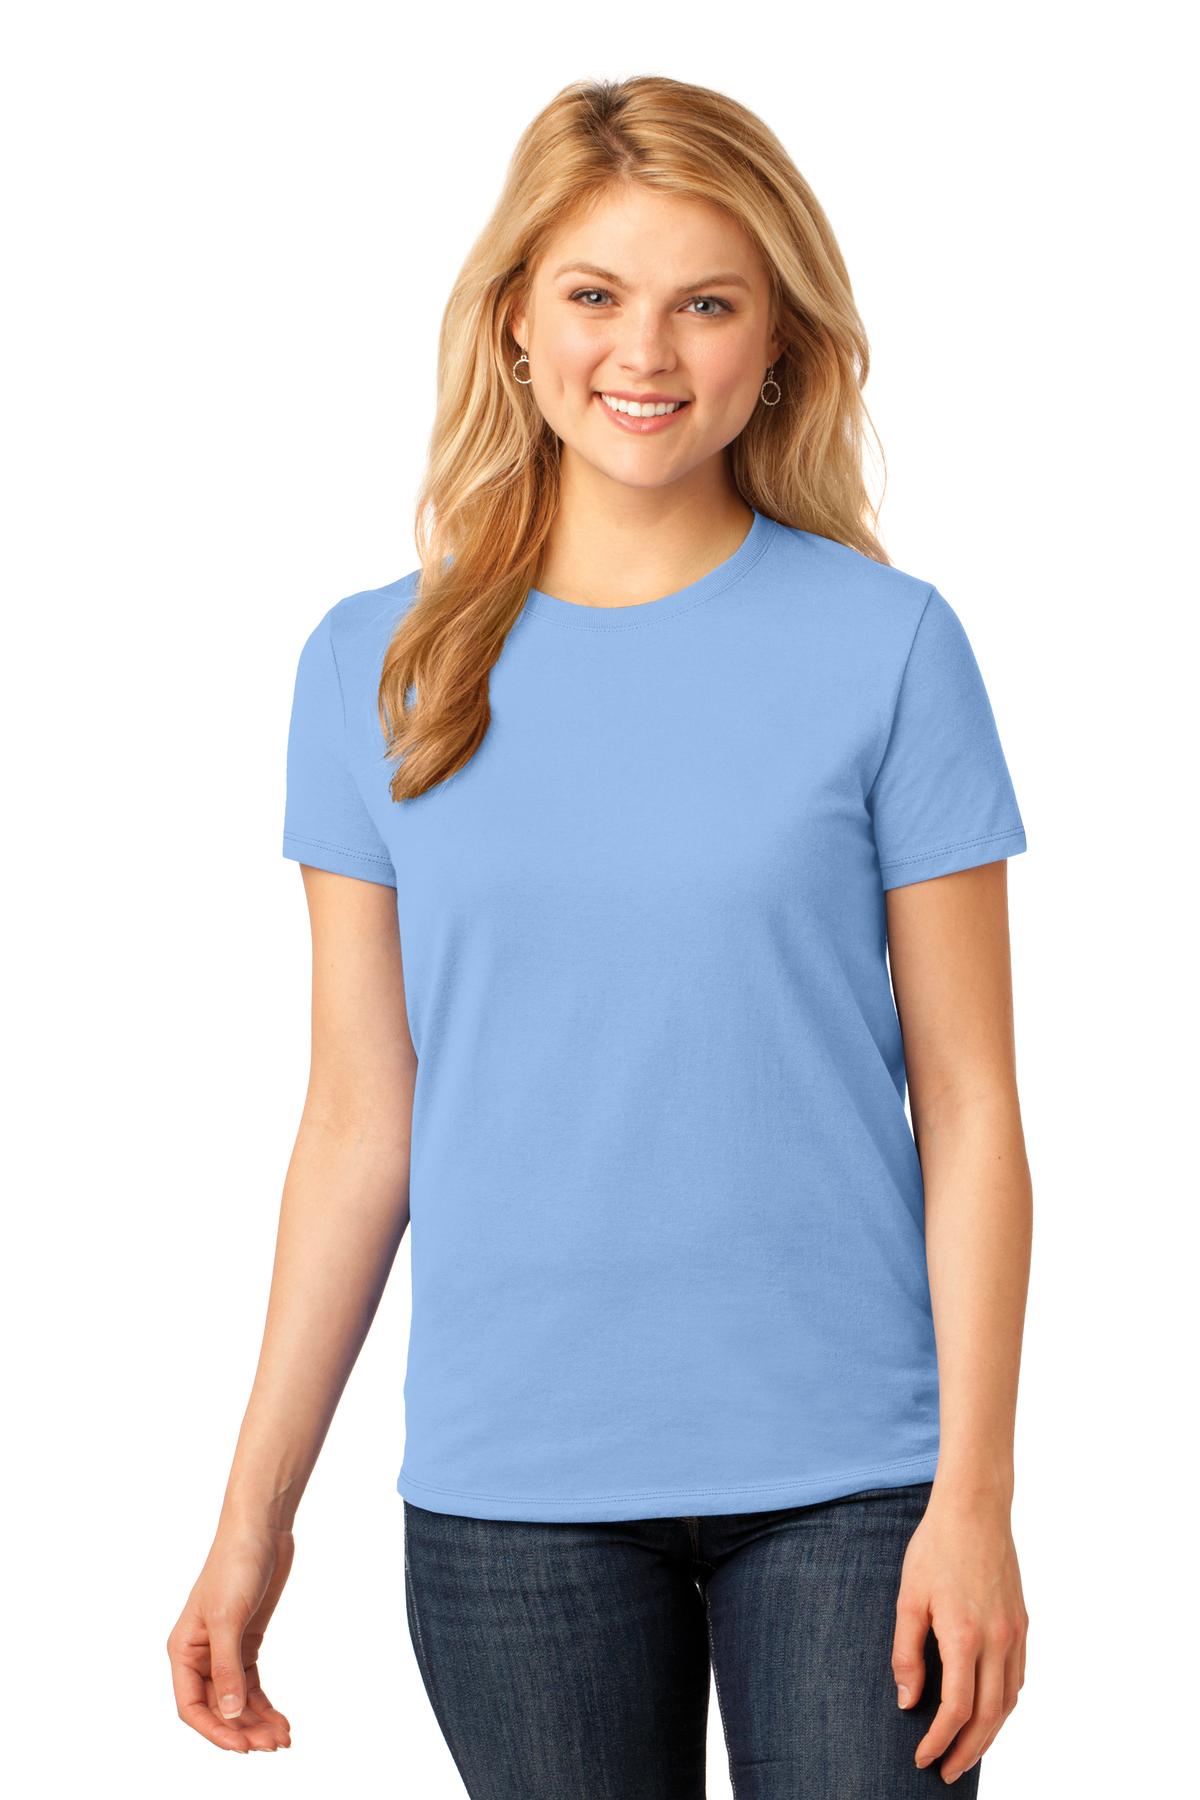 https://images.shirtspace.com/fullsize/ipPUZX4r8MGkClDLvKzG7Q%3D%3D/75353/10173-port-company-lpc54-ladies-core-cotton-tee-front-light-blue.jpg